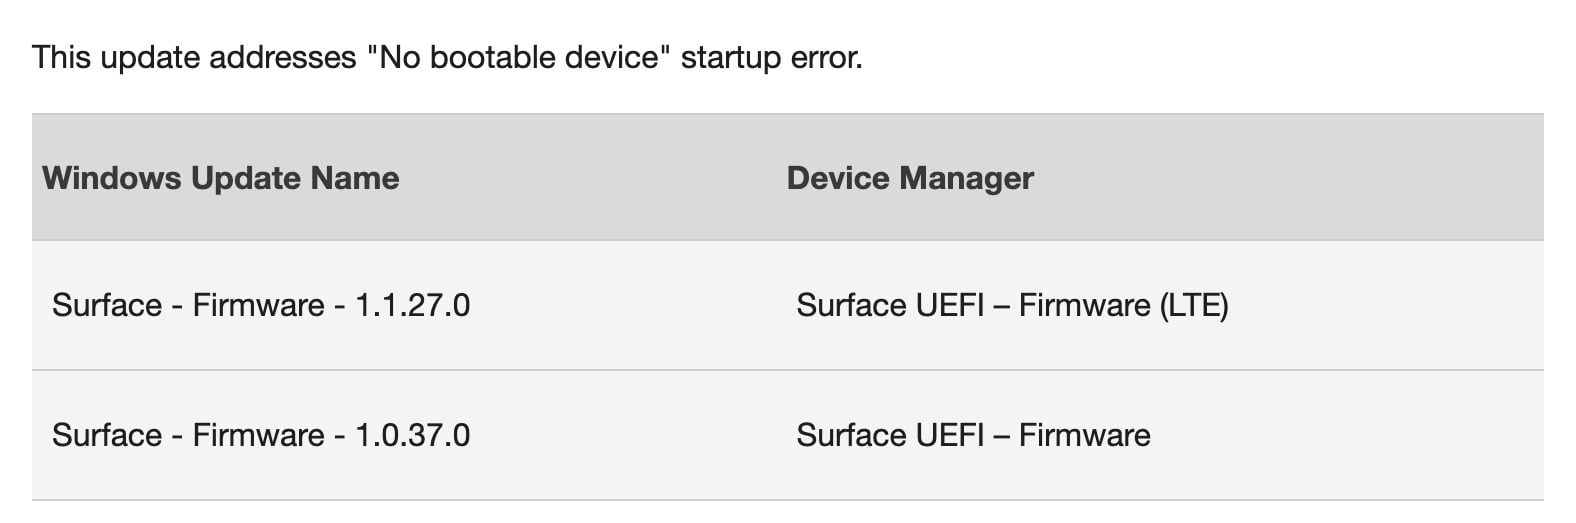 Microsoft Surface Go ได้รับการแก้ไขข้อผิดพลาดในการเริ่มต้นระบบ “ไม่มีอุปกรณ์ที่สามารถบู๊ตได้”